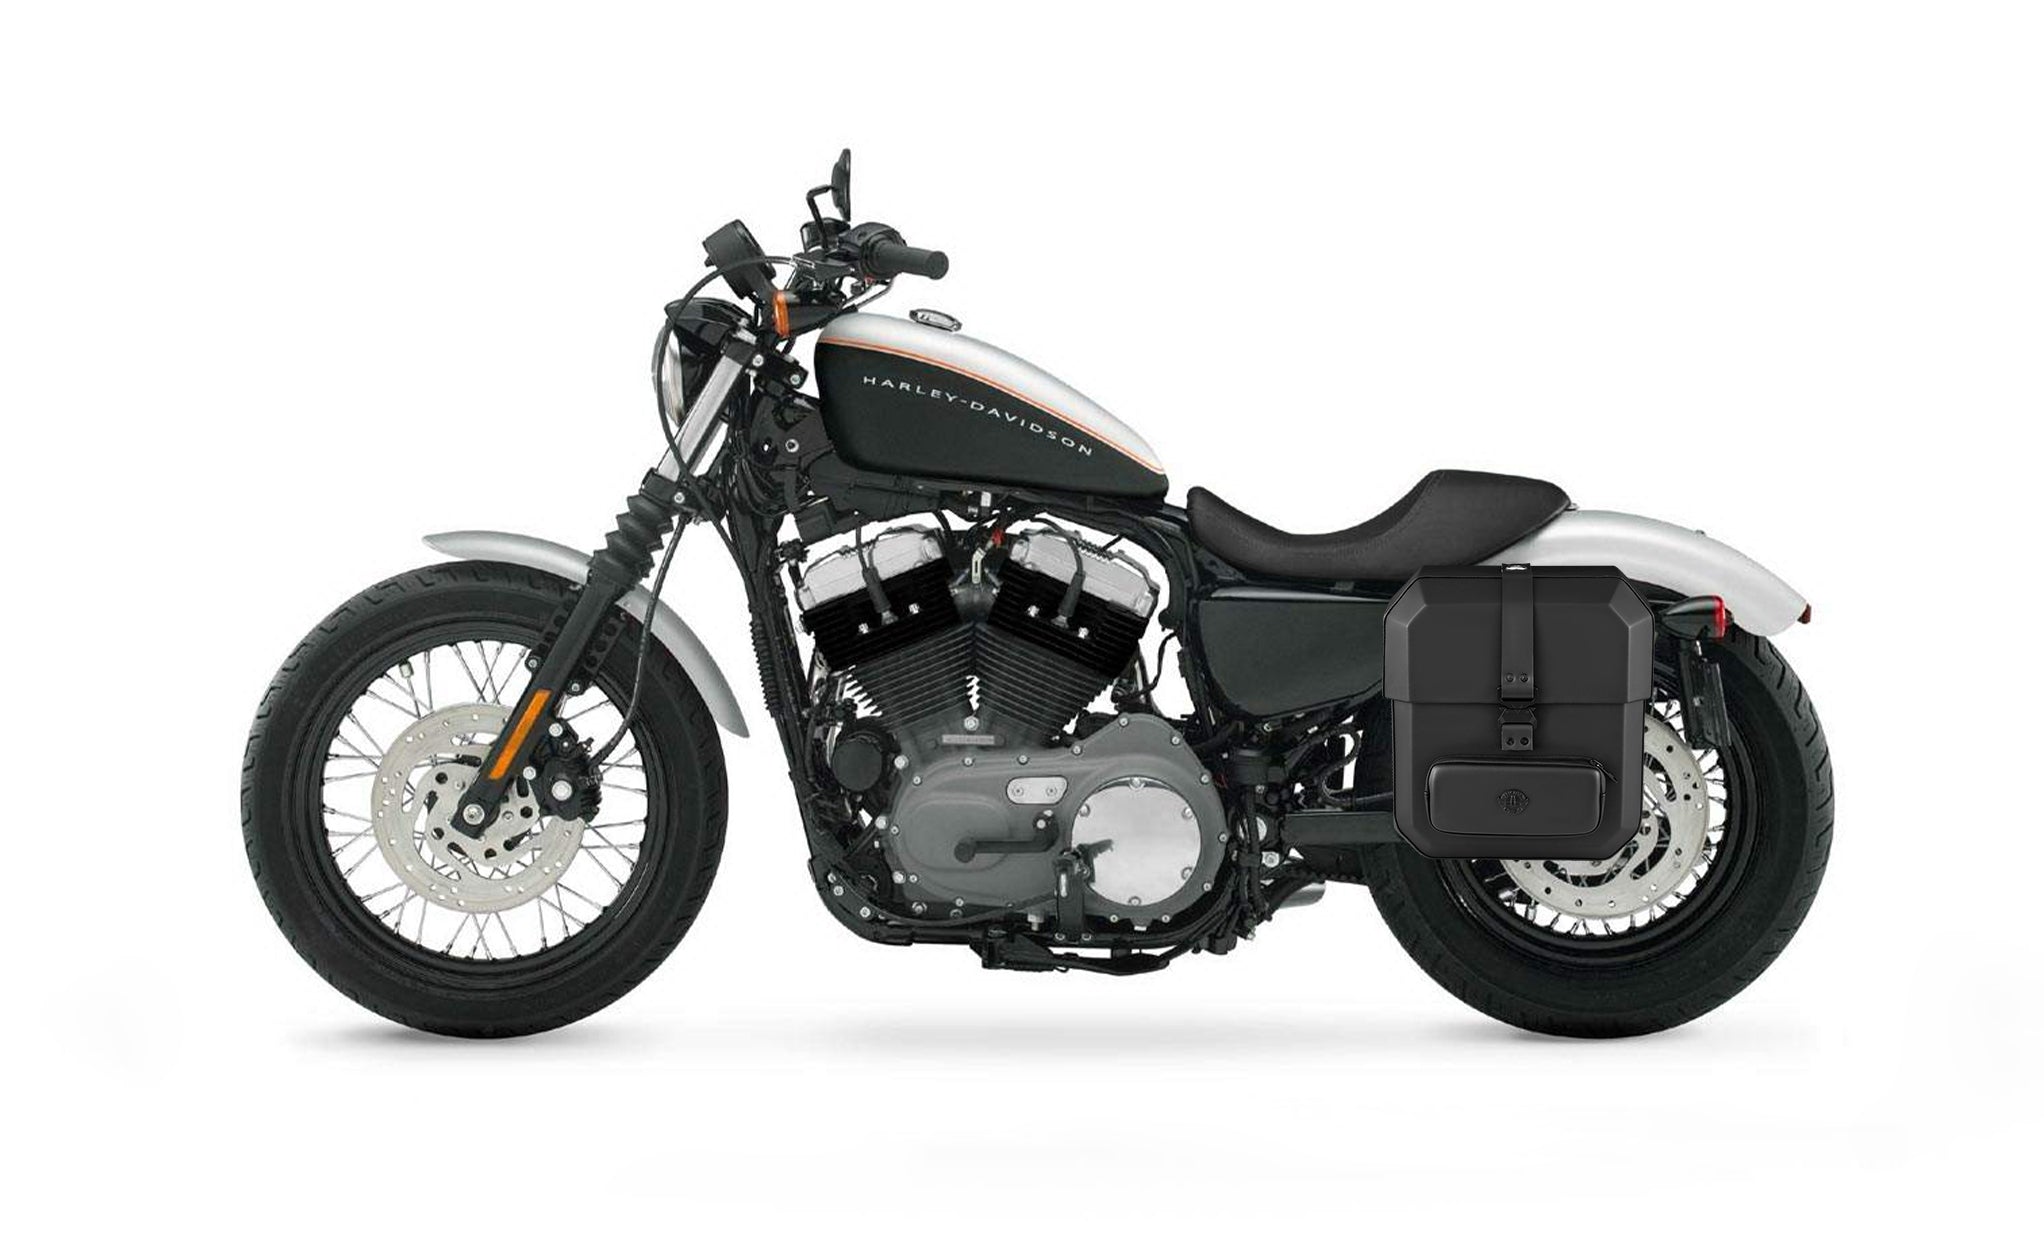 Viking 15L Outlaw Quick Mount Medium Harley Sportster 1200 Nightster Xl1200N Solo Hard Saddlebag Left Only Bag on Bike @expand